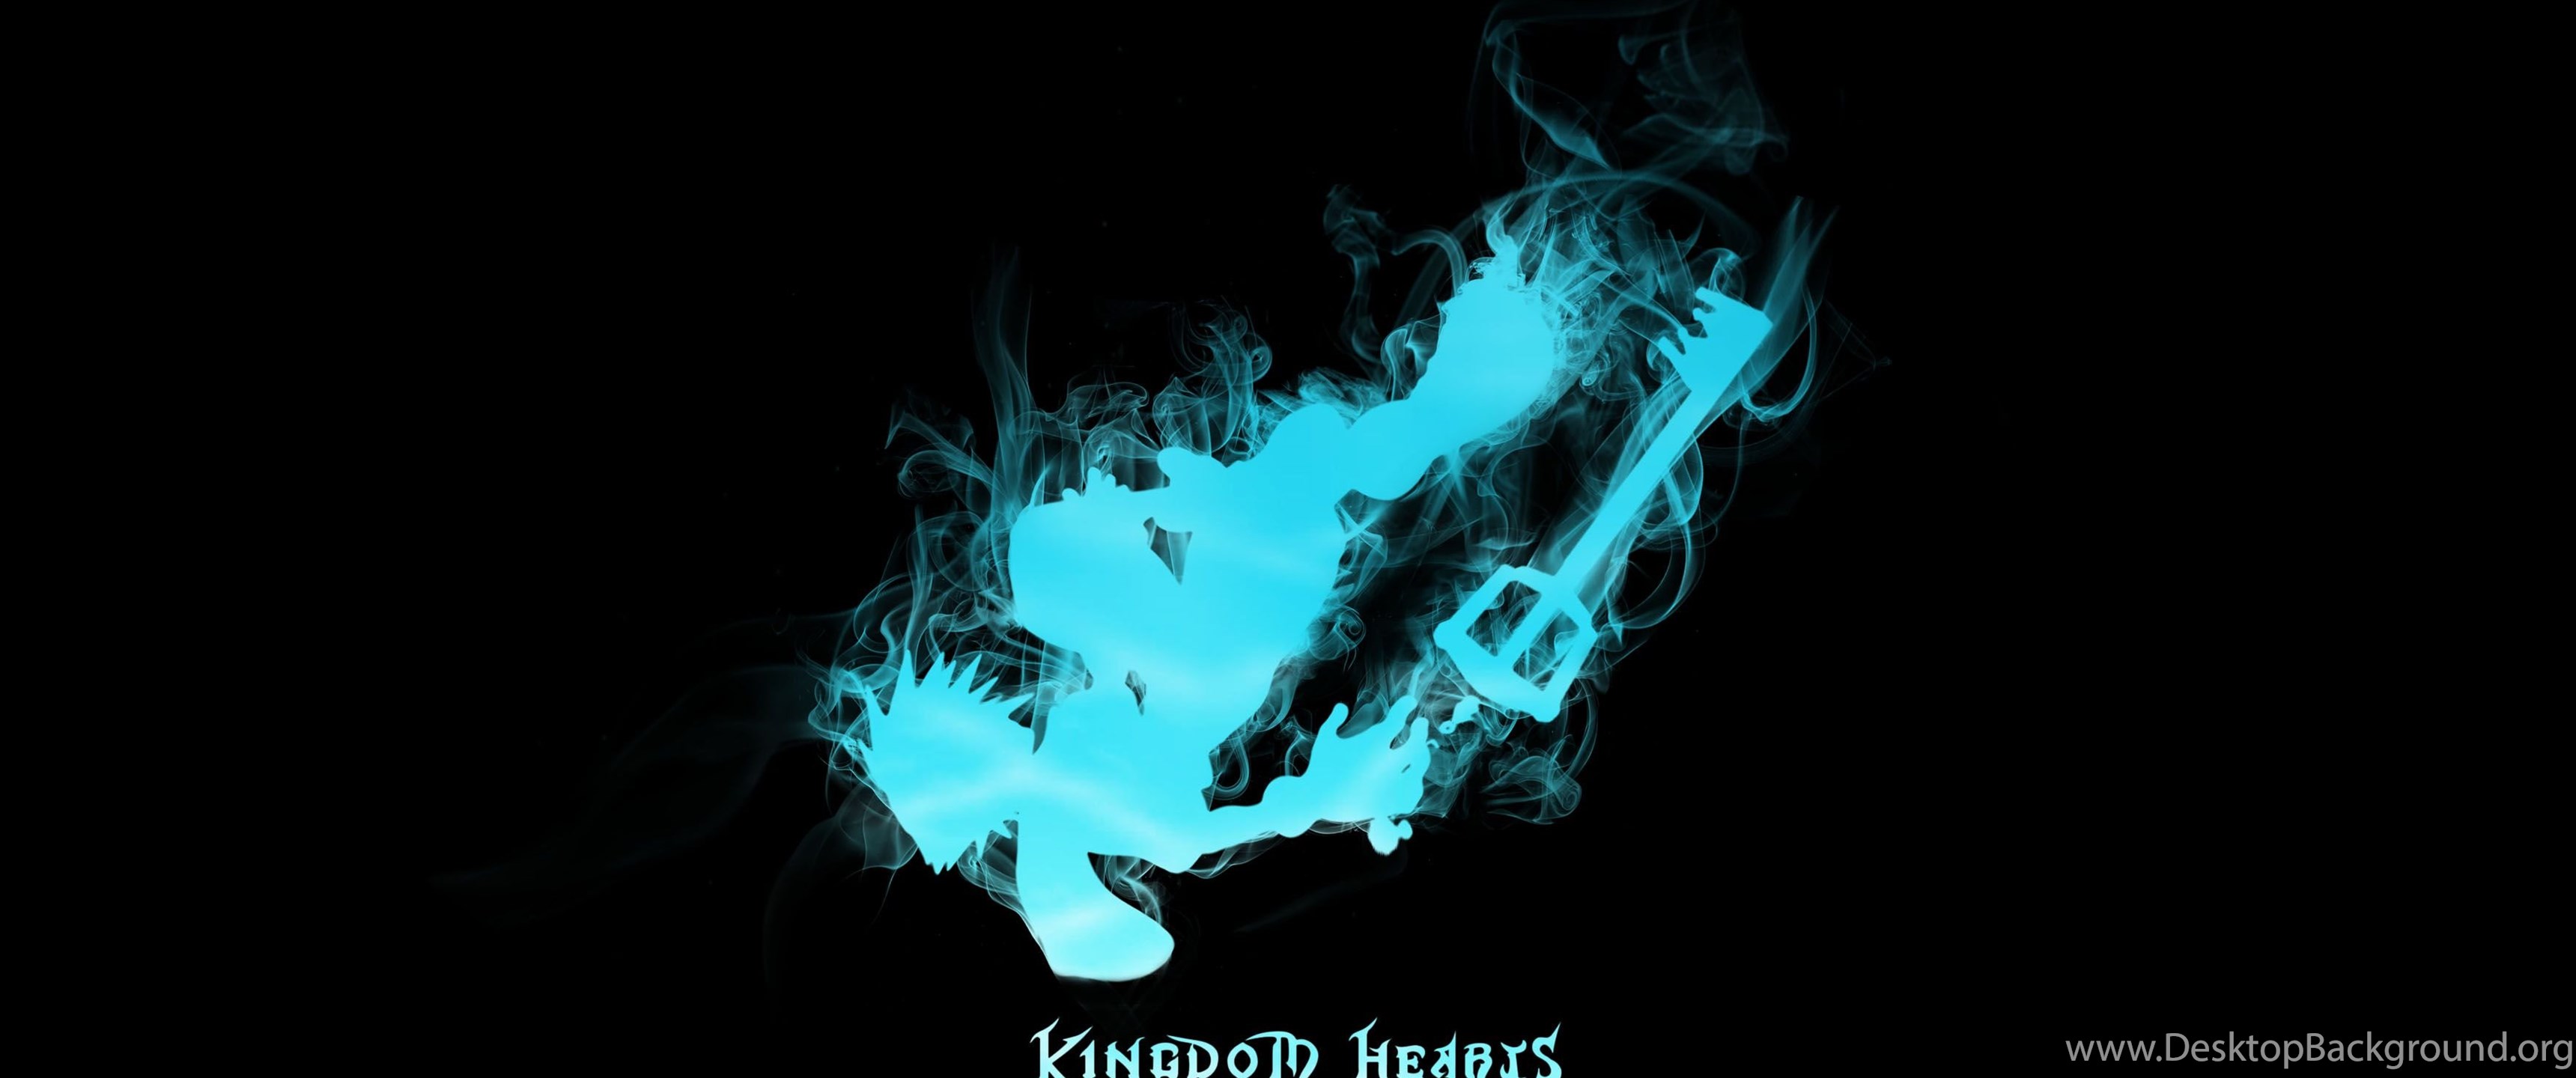 Kingdom Hearts Desktop Wallpaper By StaticXshadows Desktop Background